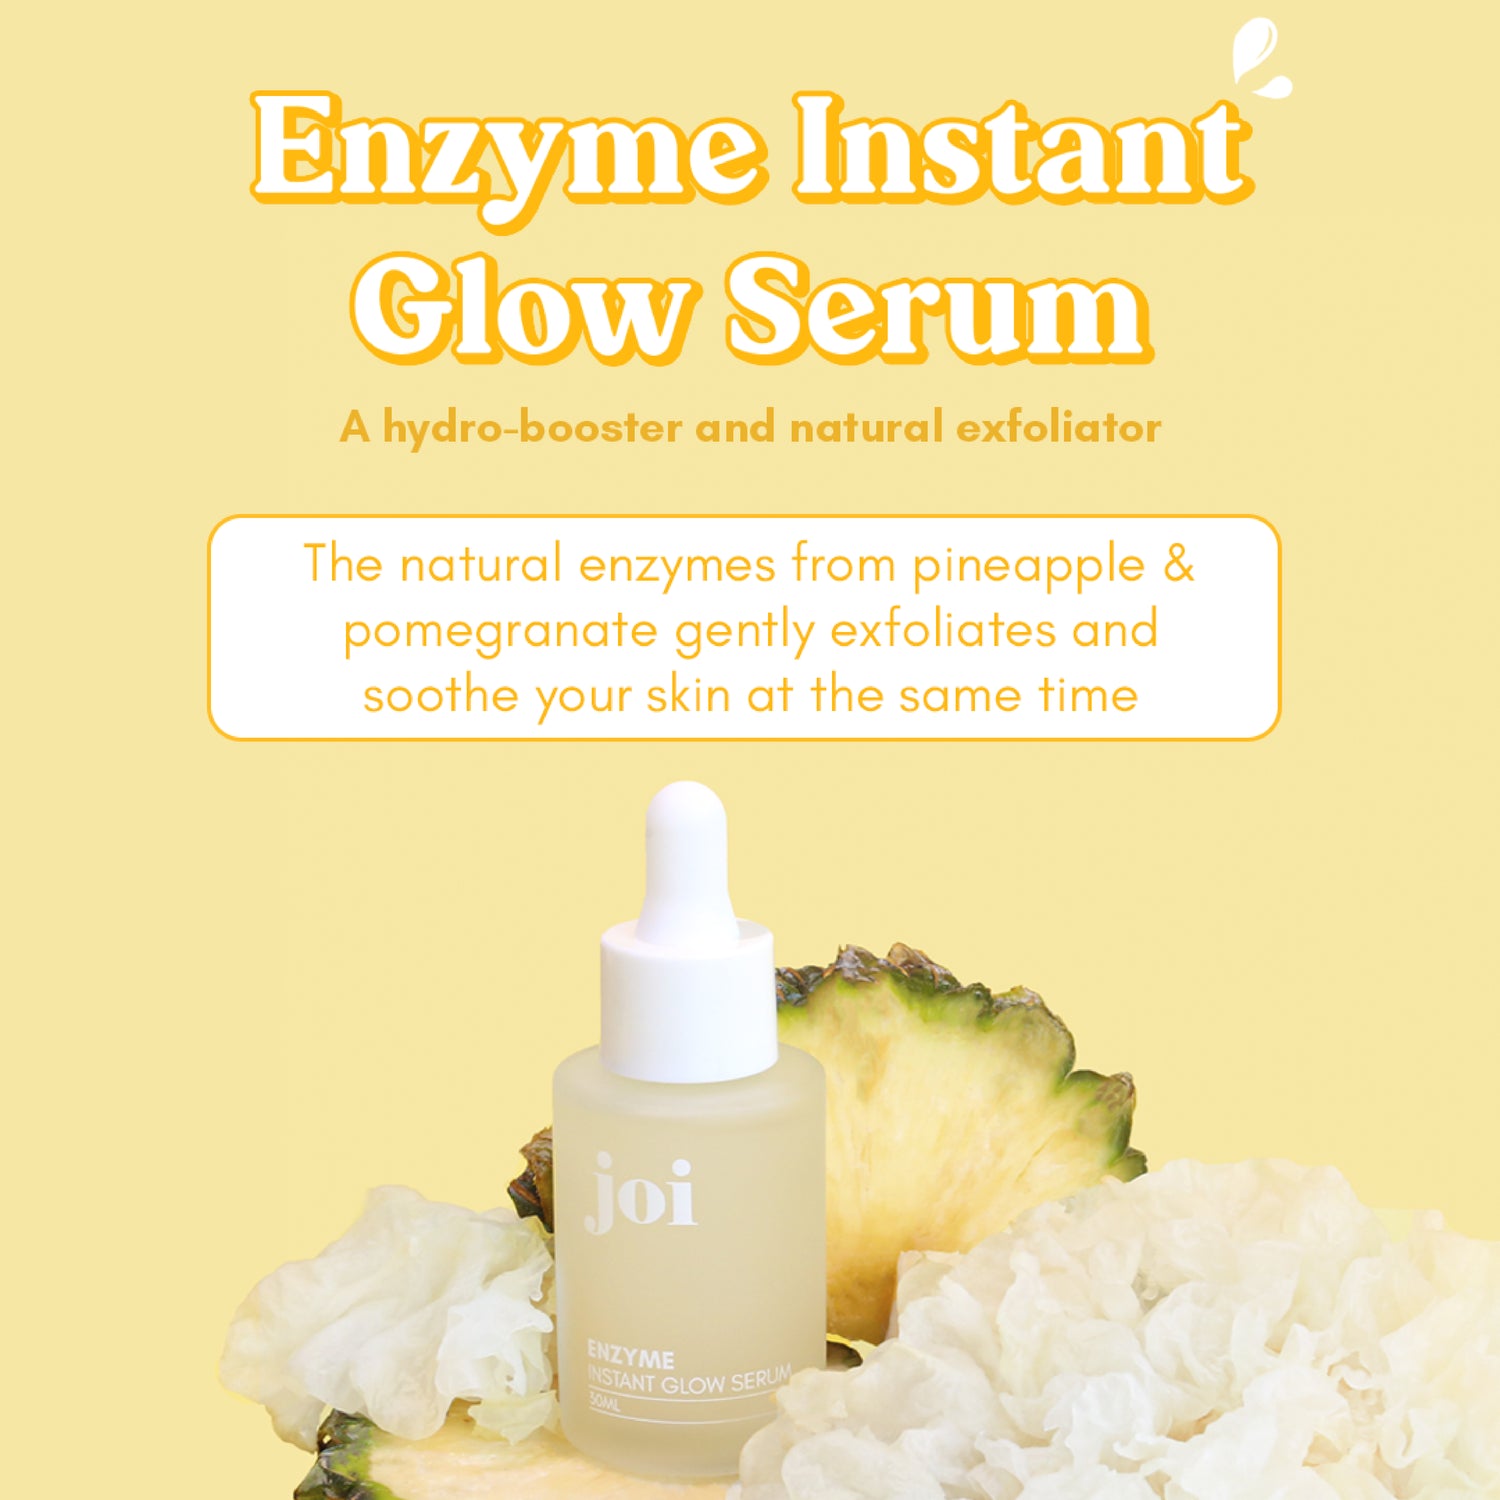 Enzyme Instant Glow Serum